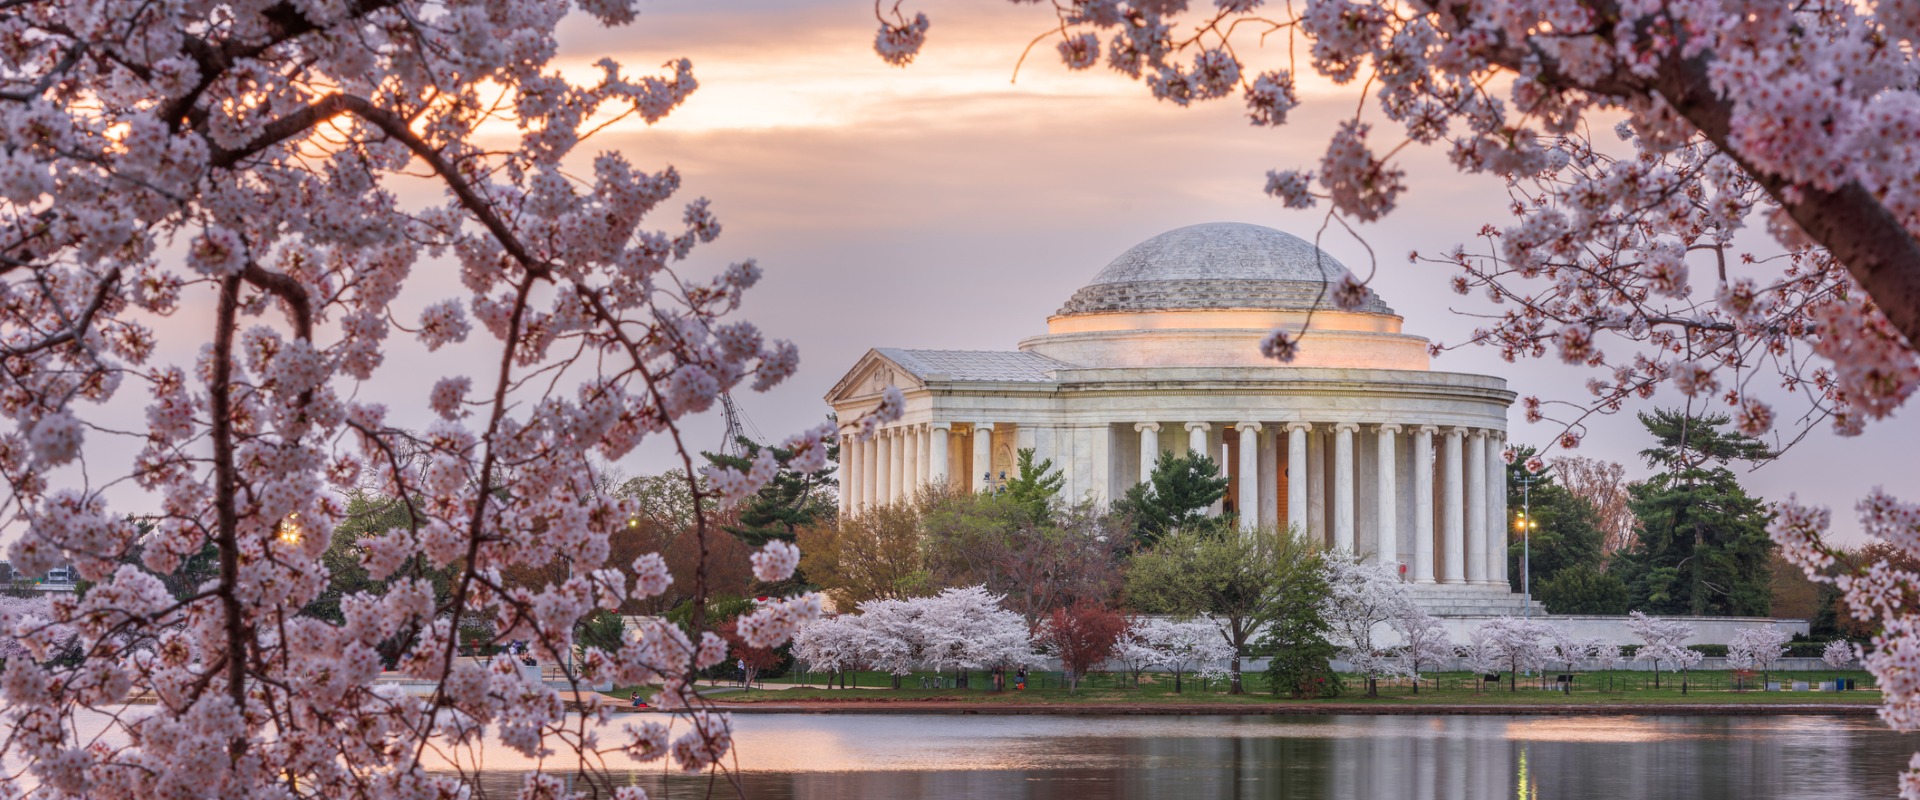 Washington DC Jefferson Memorial